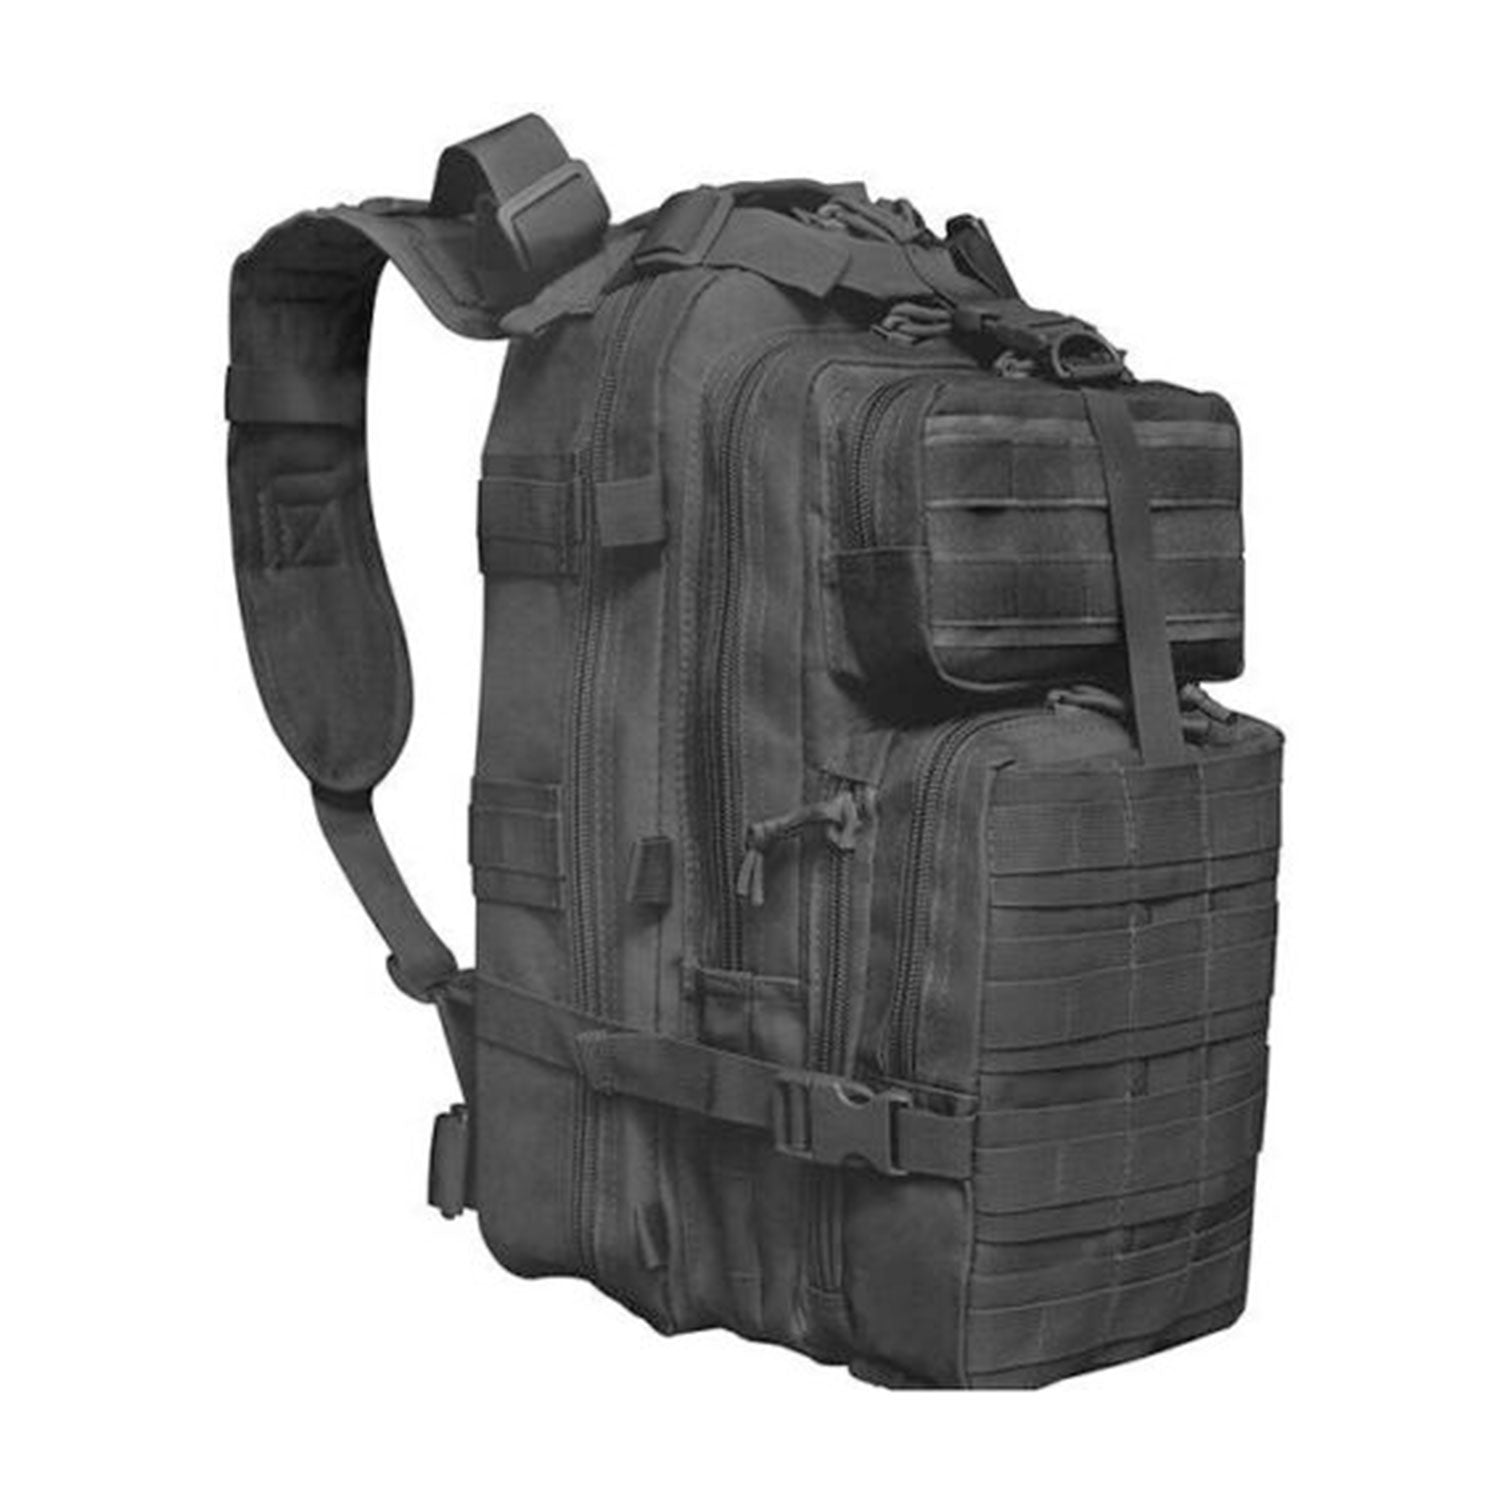 Waterproof Tactical Backpack | Military Backpack